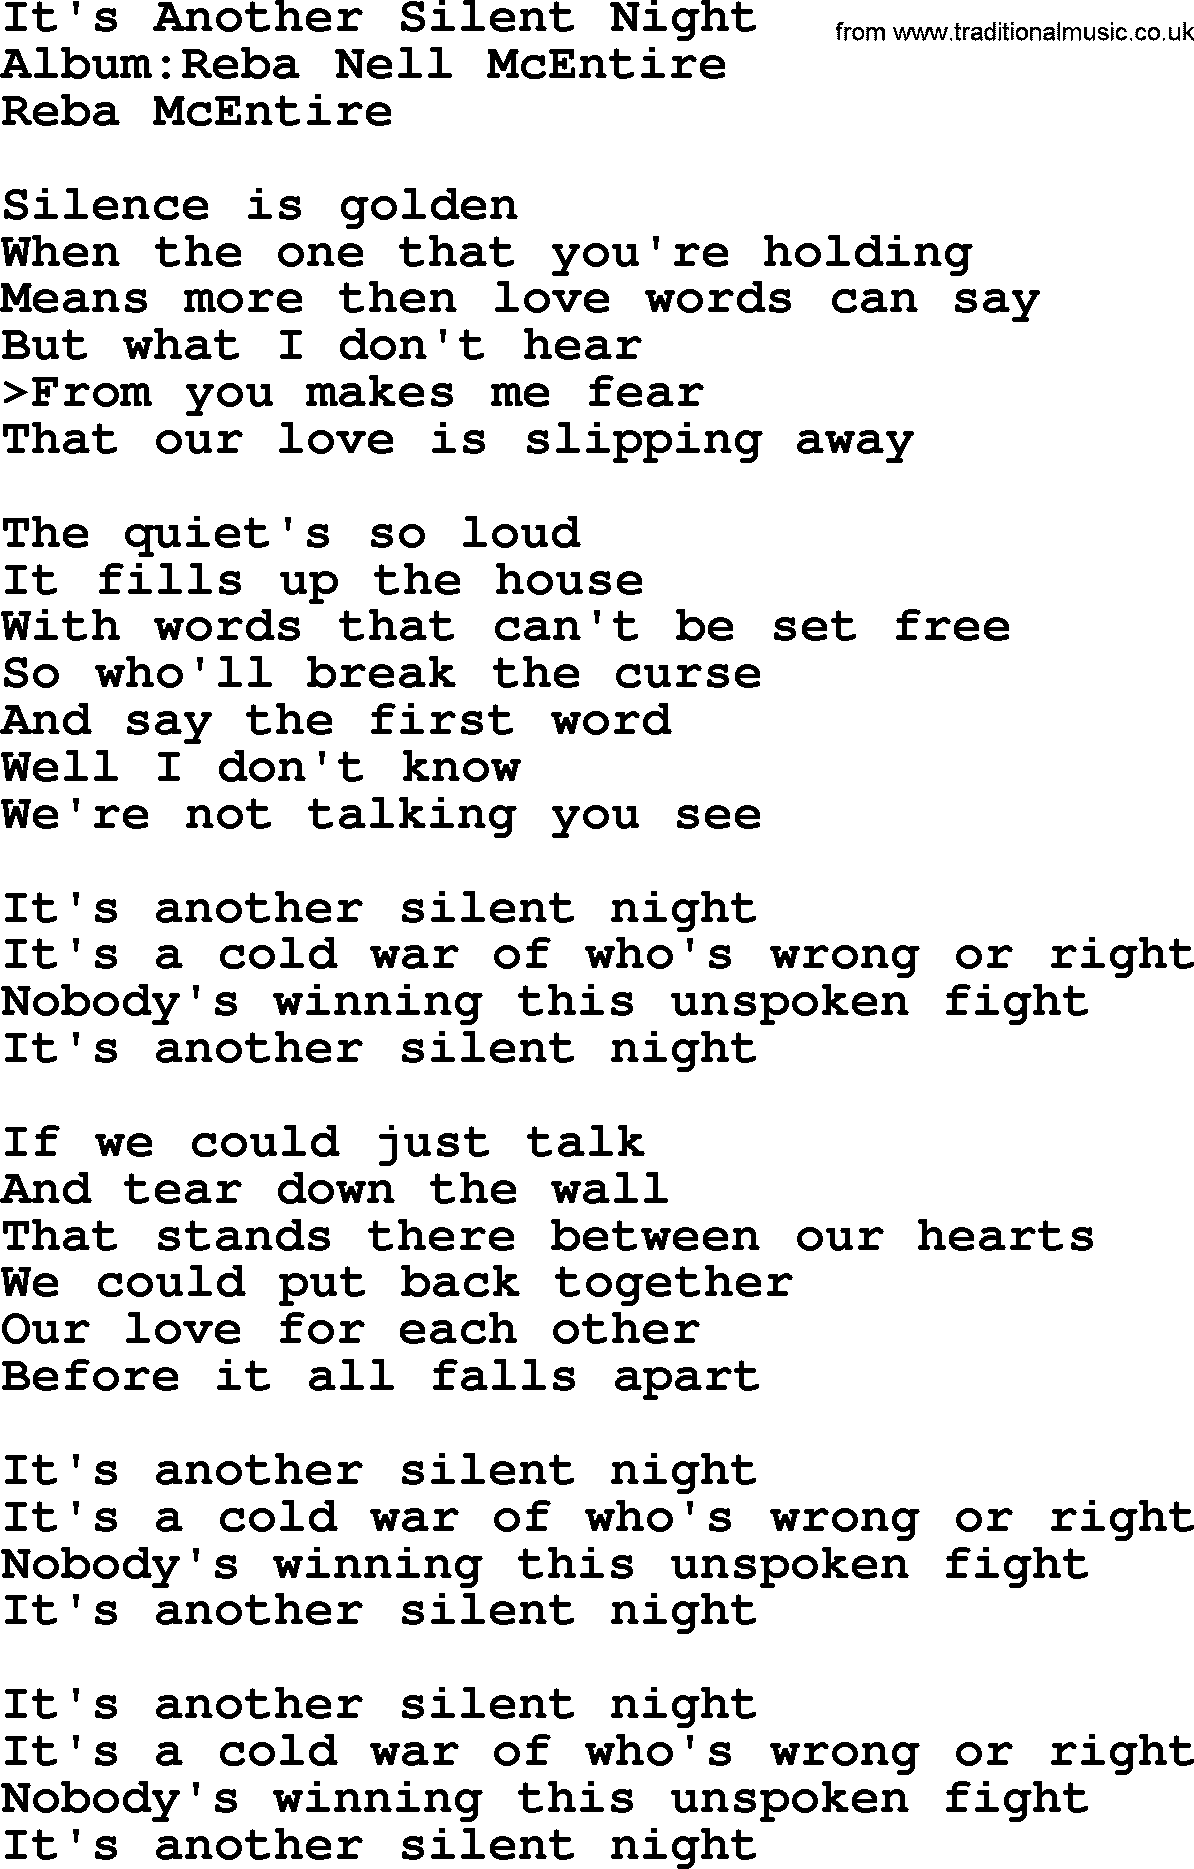 Reba McEntire song: It's Another Silent Night lyrics